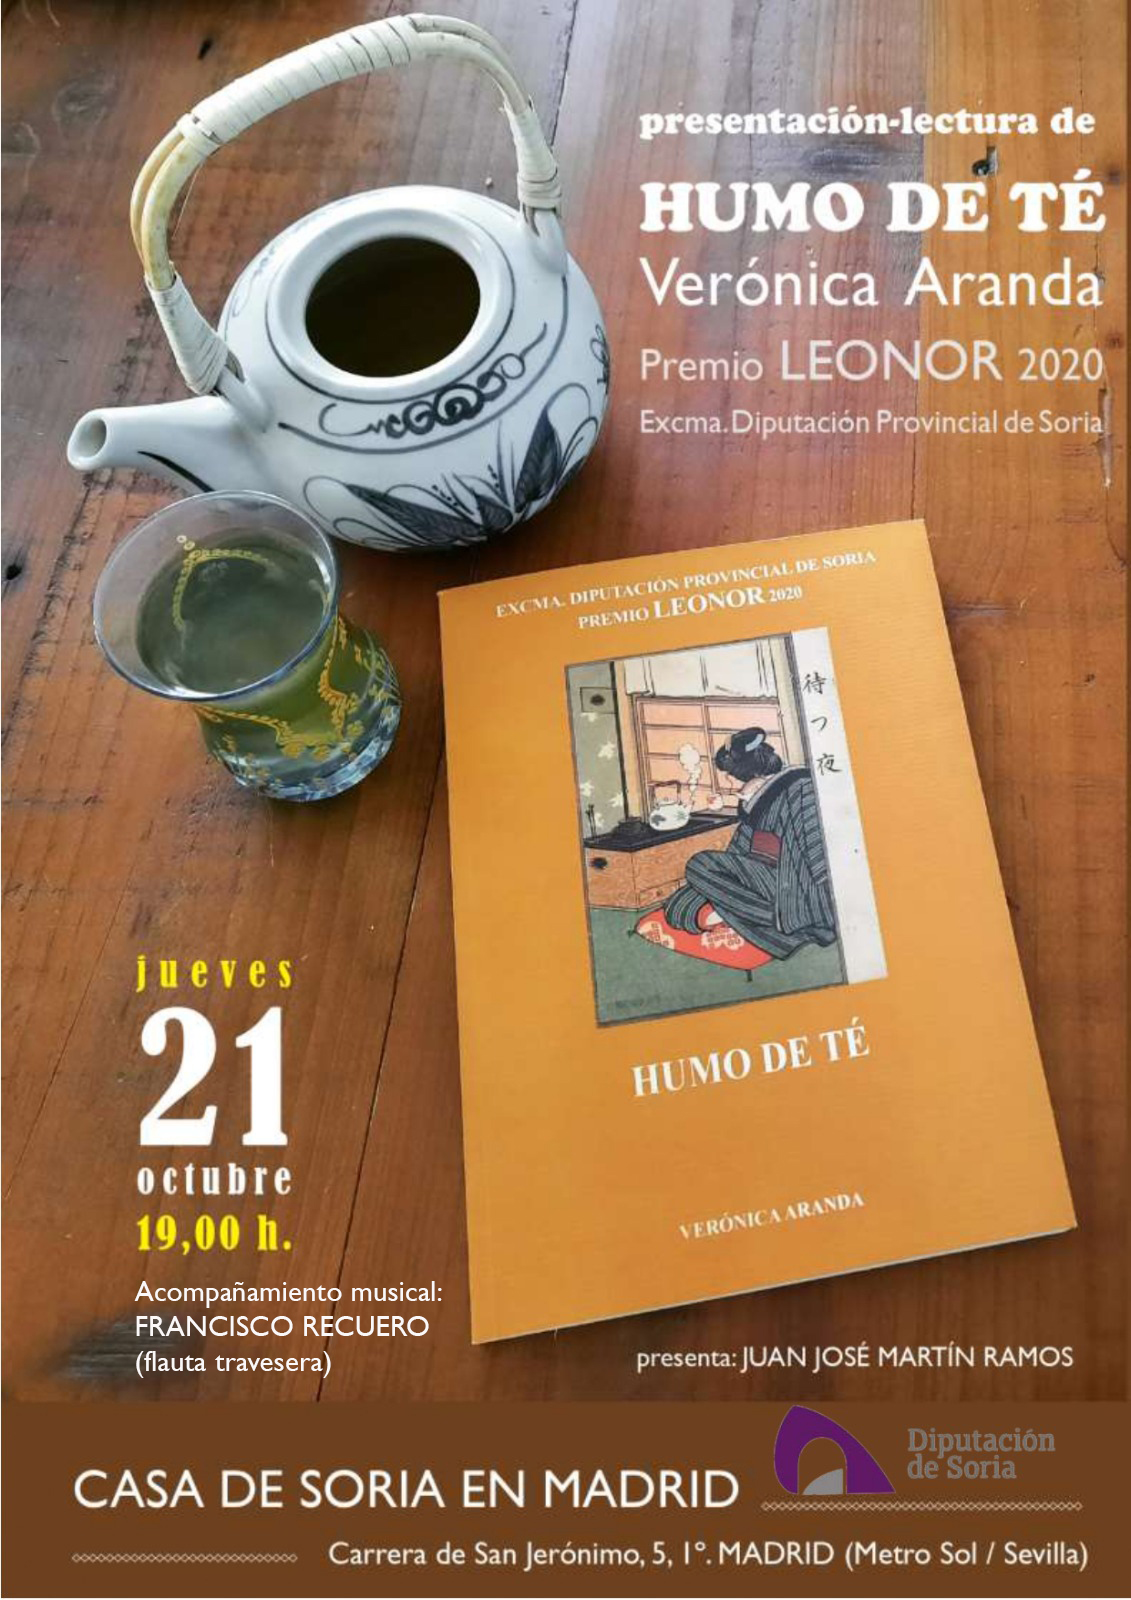 Verónica Aranda on Twitter: 